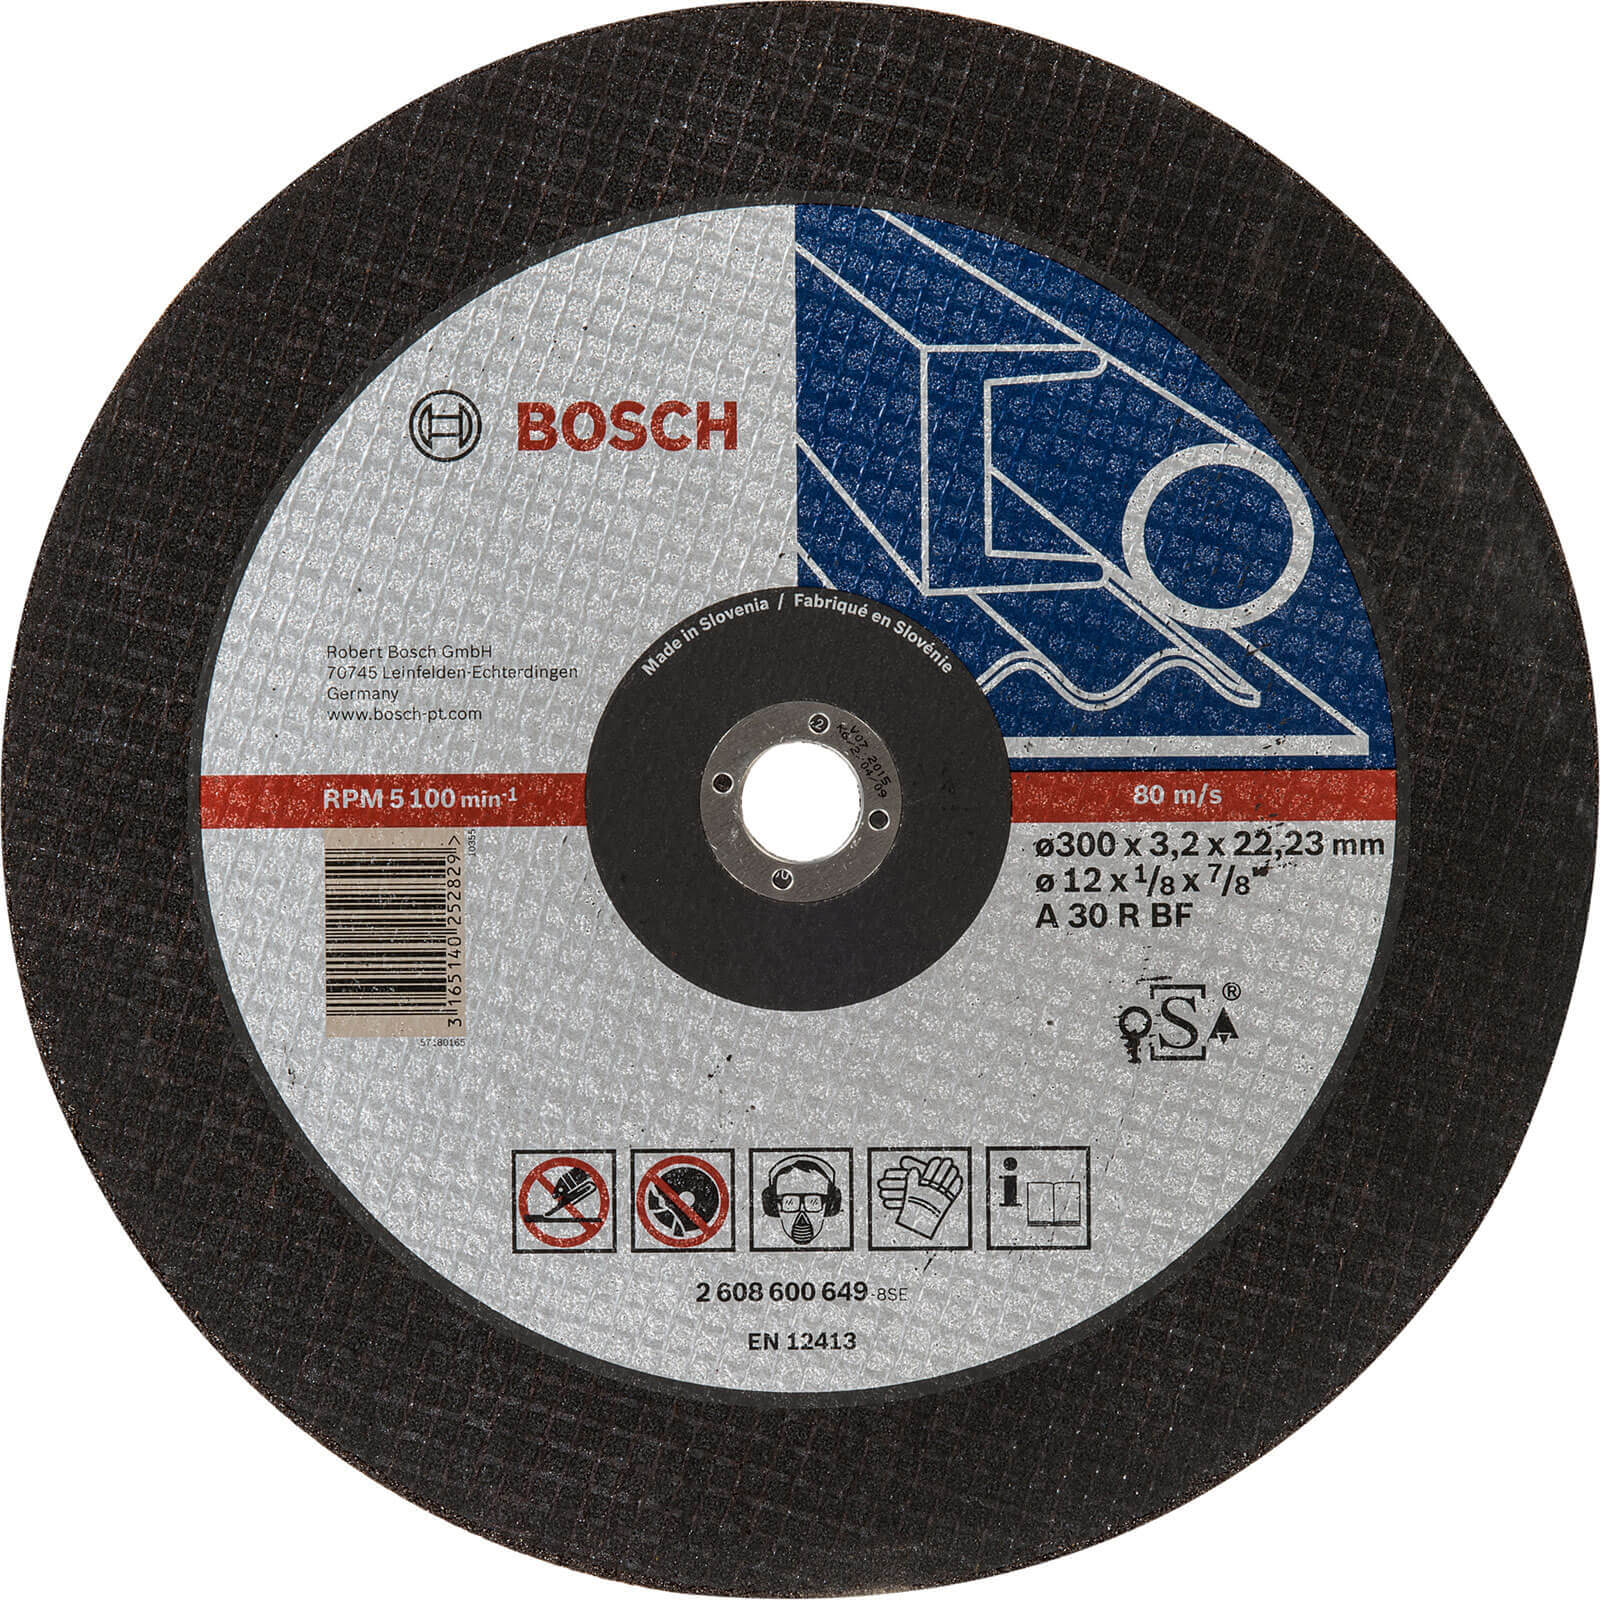 Image of Bosch Expert A30S BF Flat Metal Cutting Disc 300mm